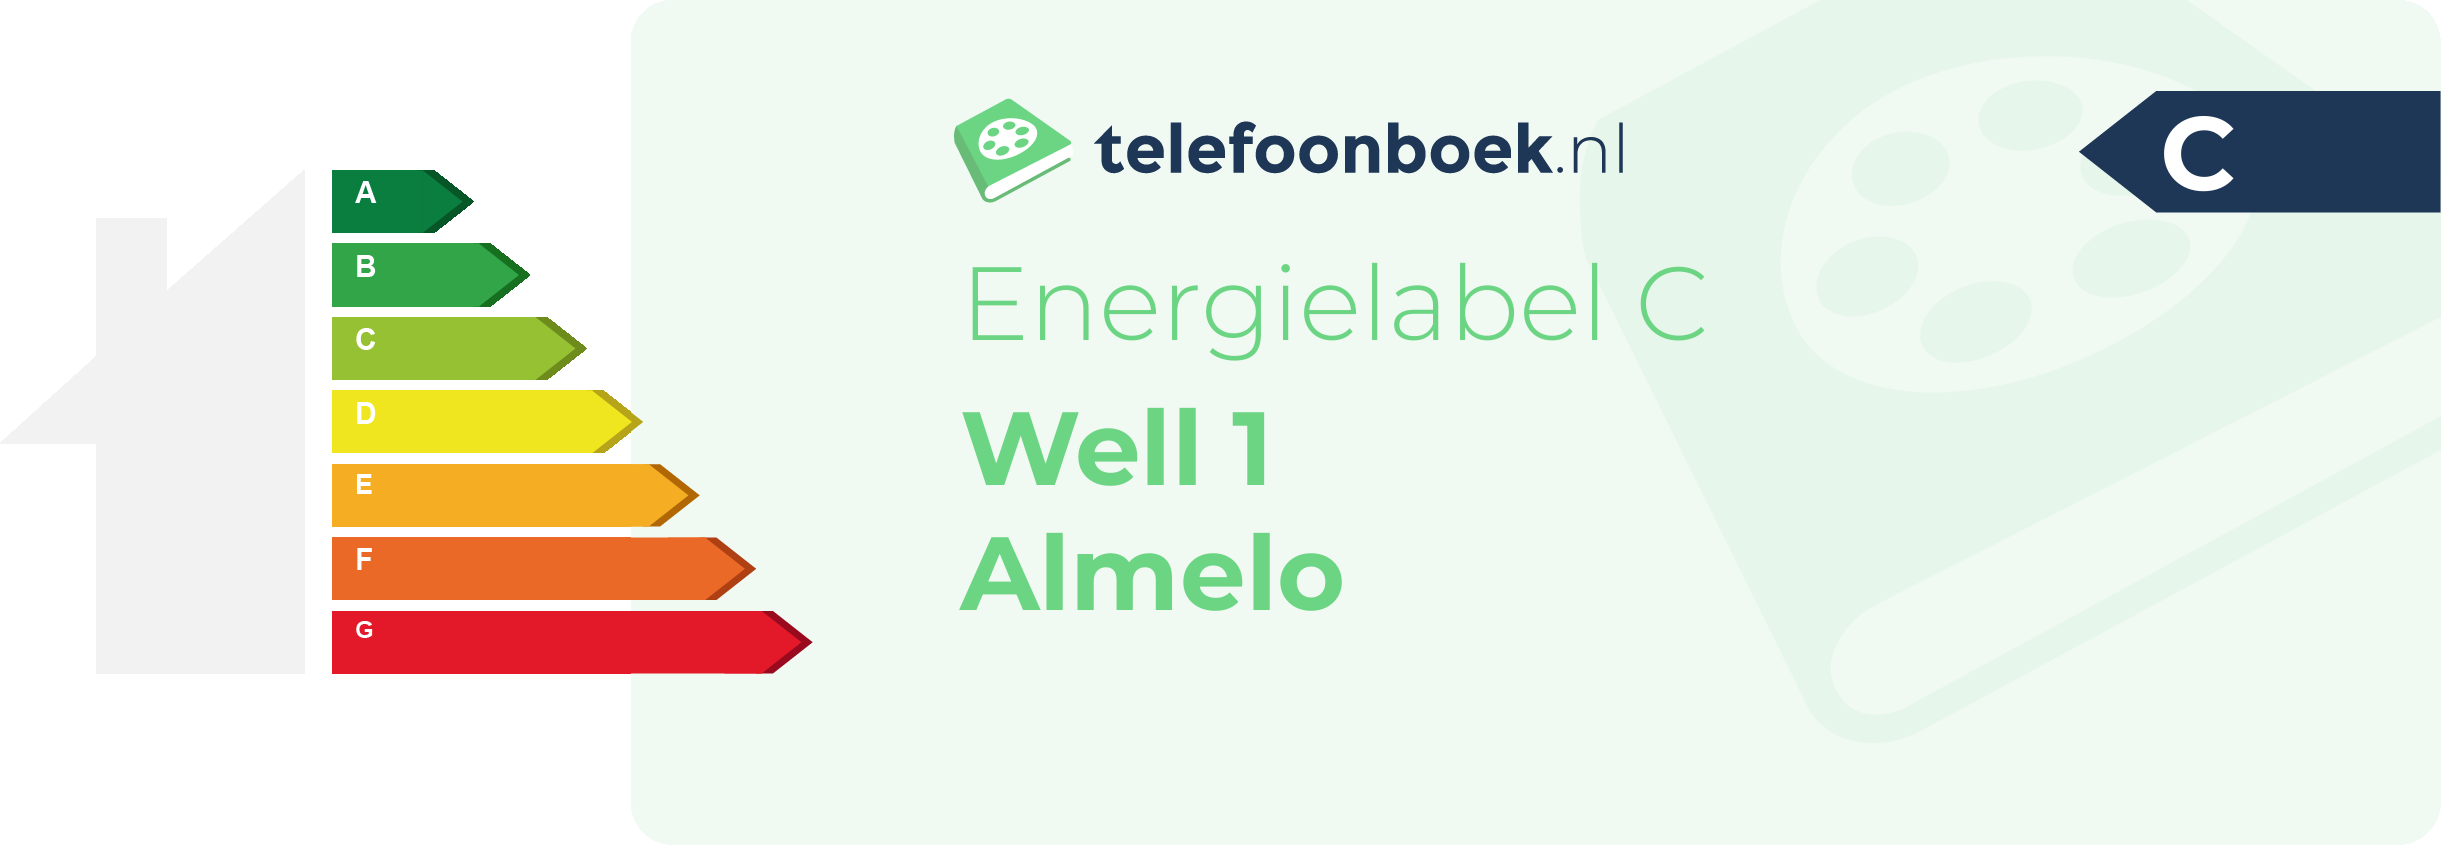 Energielabel Well 1 Almelo